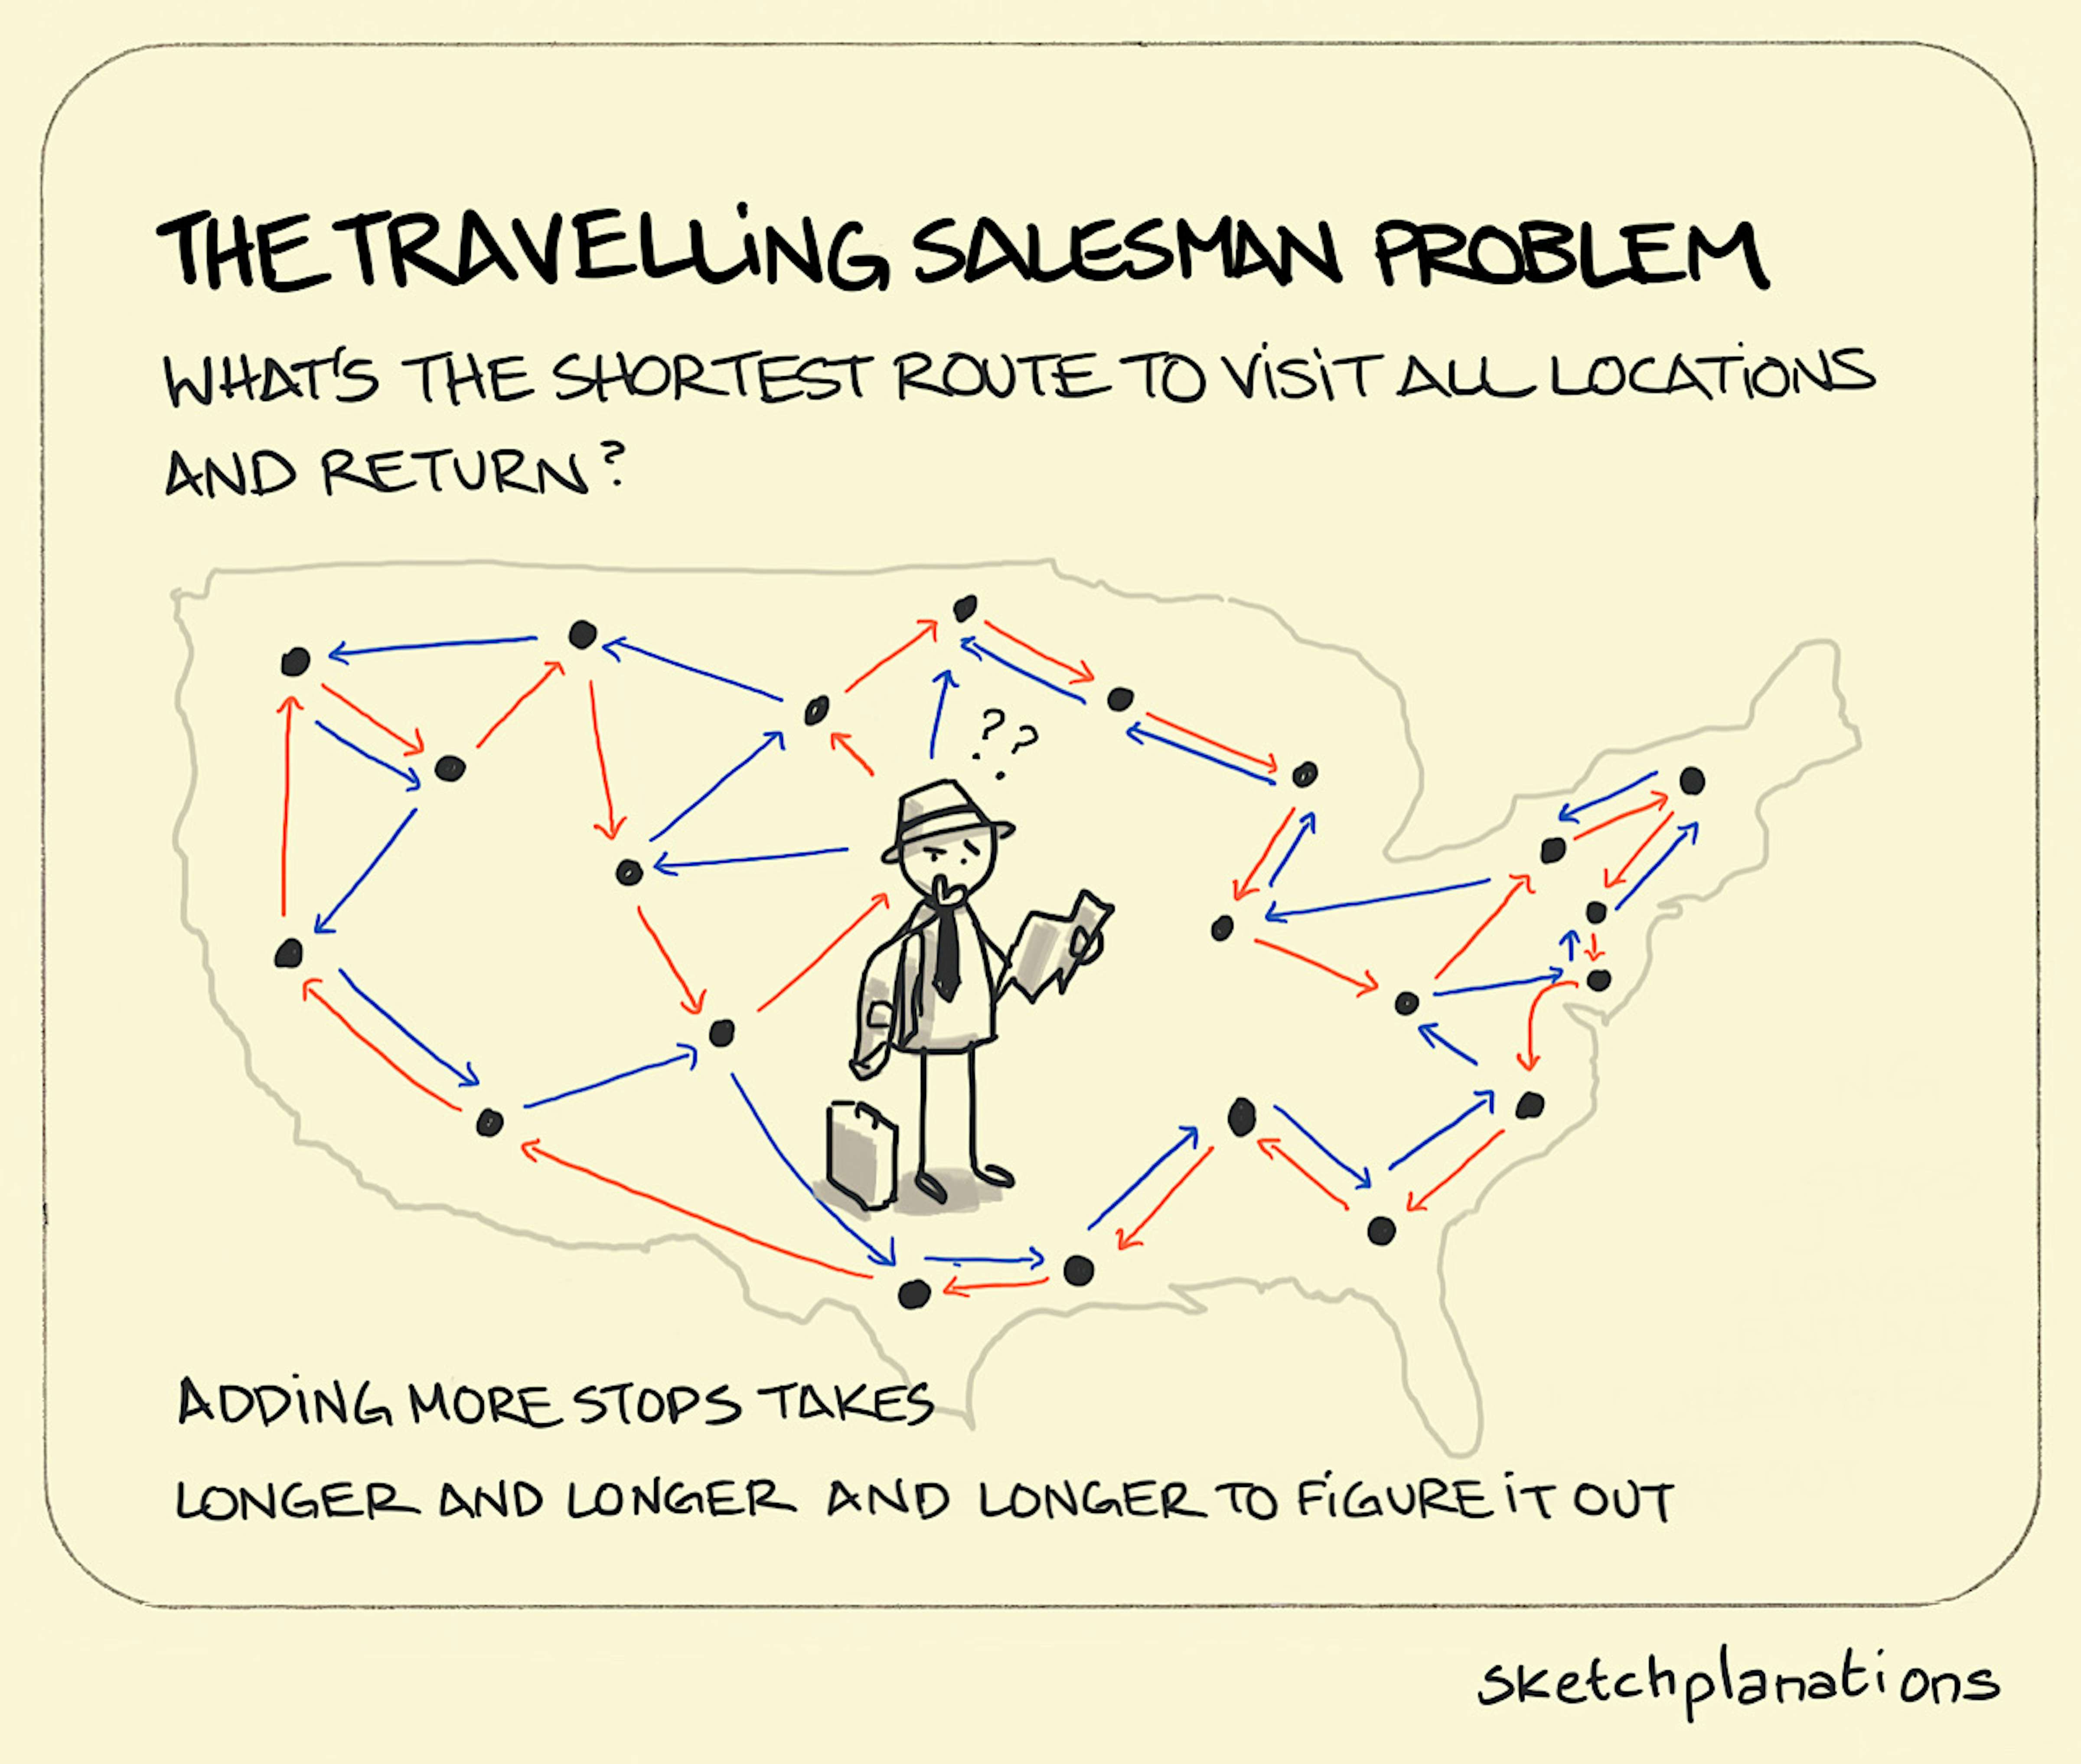 travelling salesman problem online